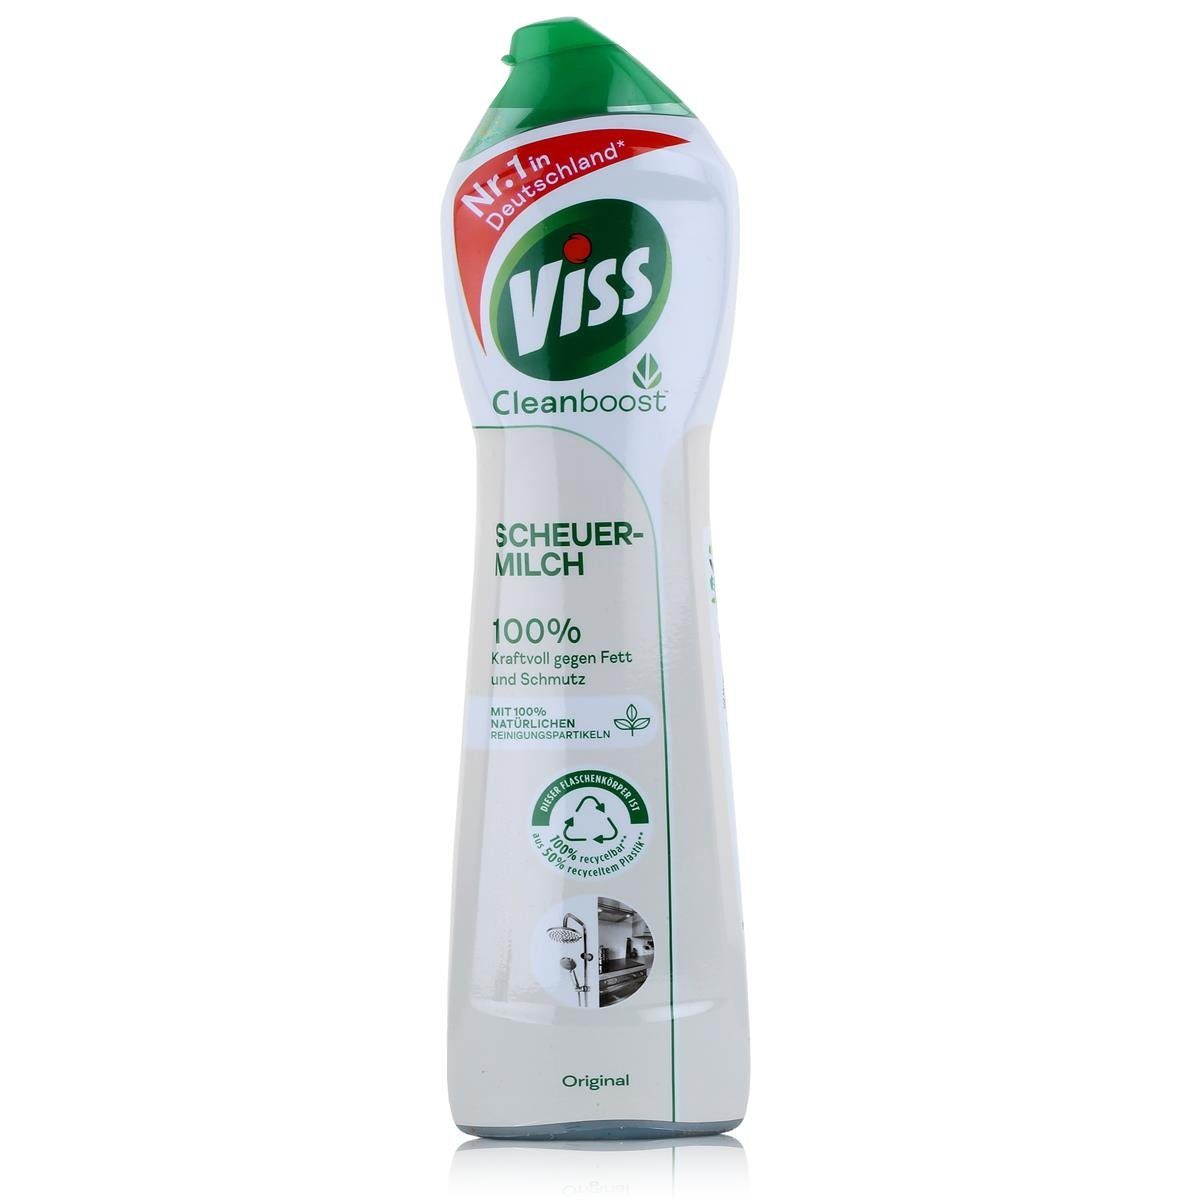 Viss Viss Cleanboost Scheuer-Milch Original 500ml - Gegen Fett und Schmutz Універсальний засіб для чищення